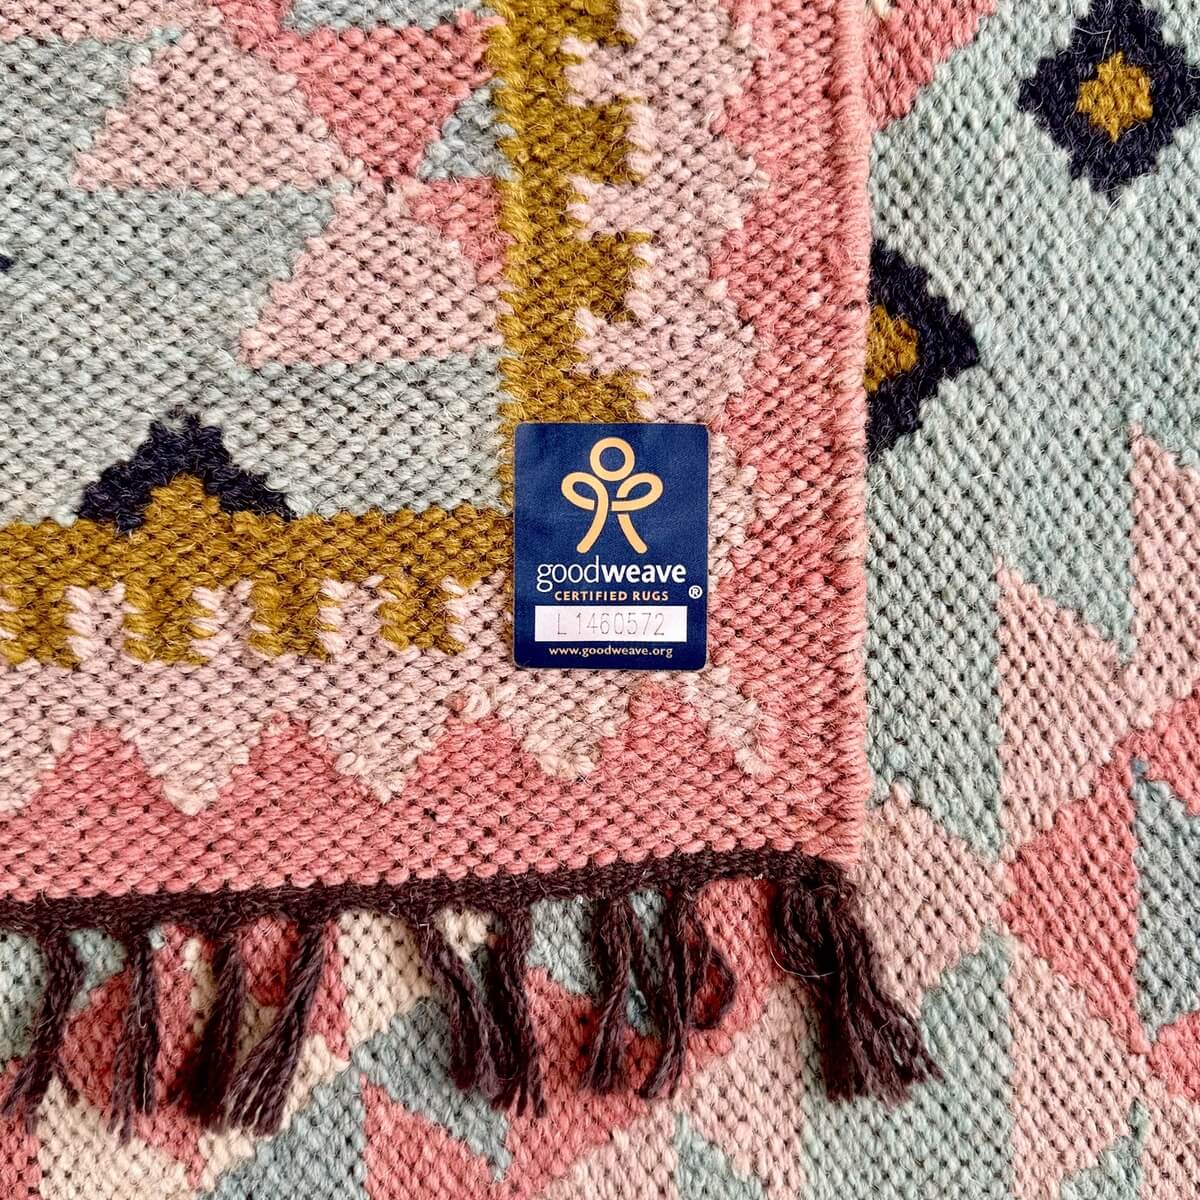 covor traditional kilim Jovita tesut manual 100% din lana, model geometric in romb in culori roz si turcoaz, certificat goodweave